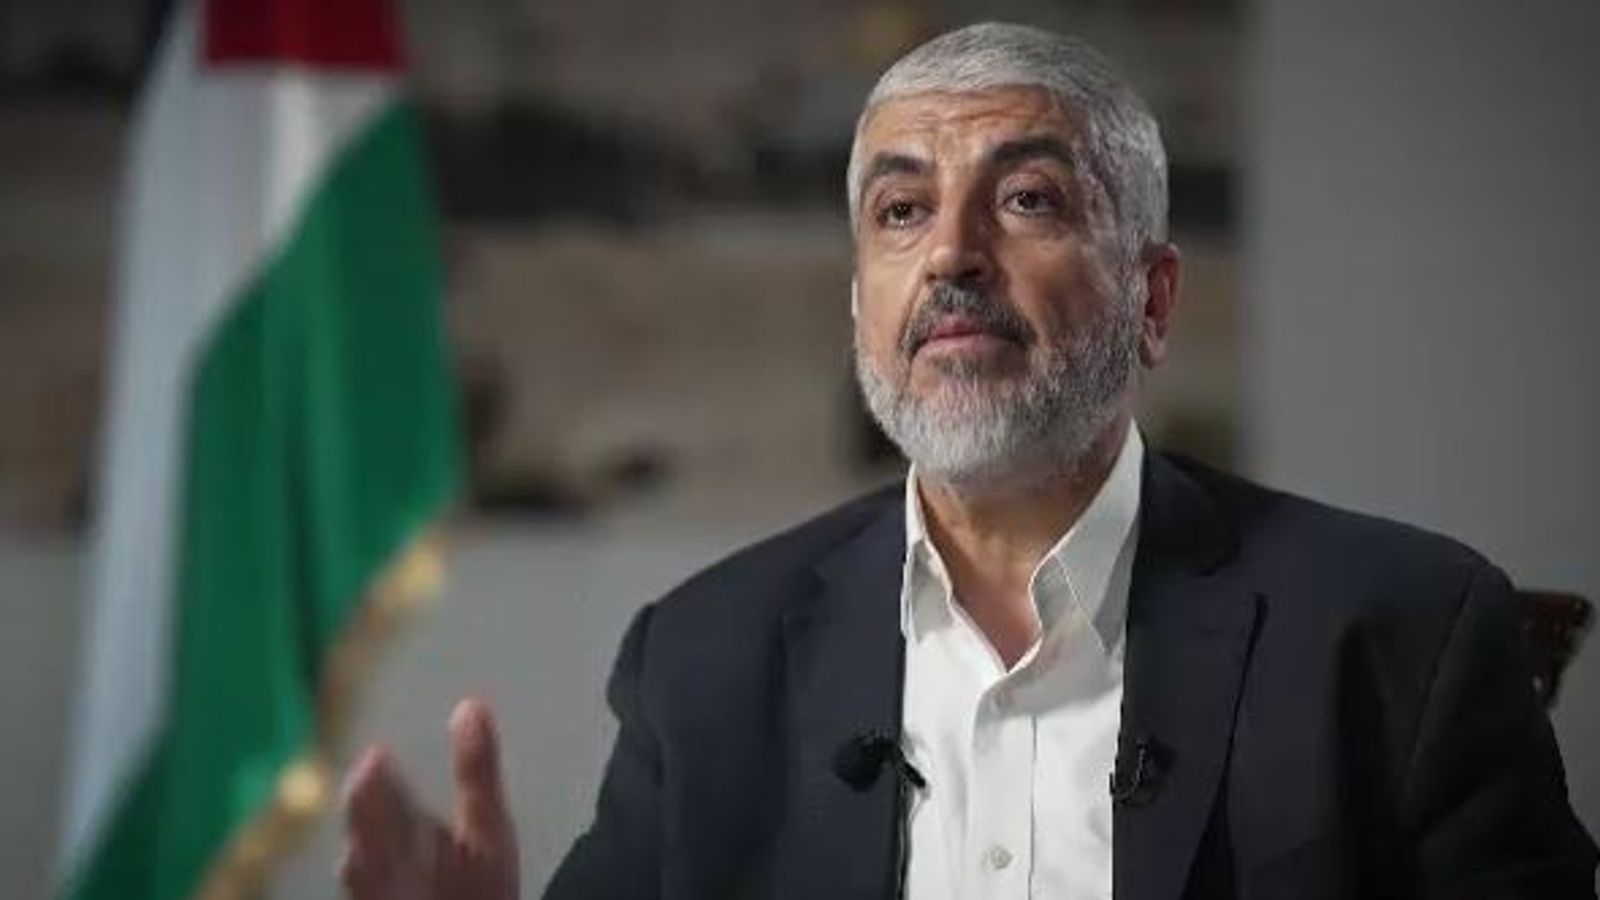 Civilian hostages will be freed if Israel reduces Gaza bombing, senior Hamas leader says